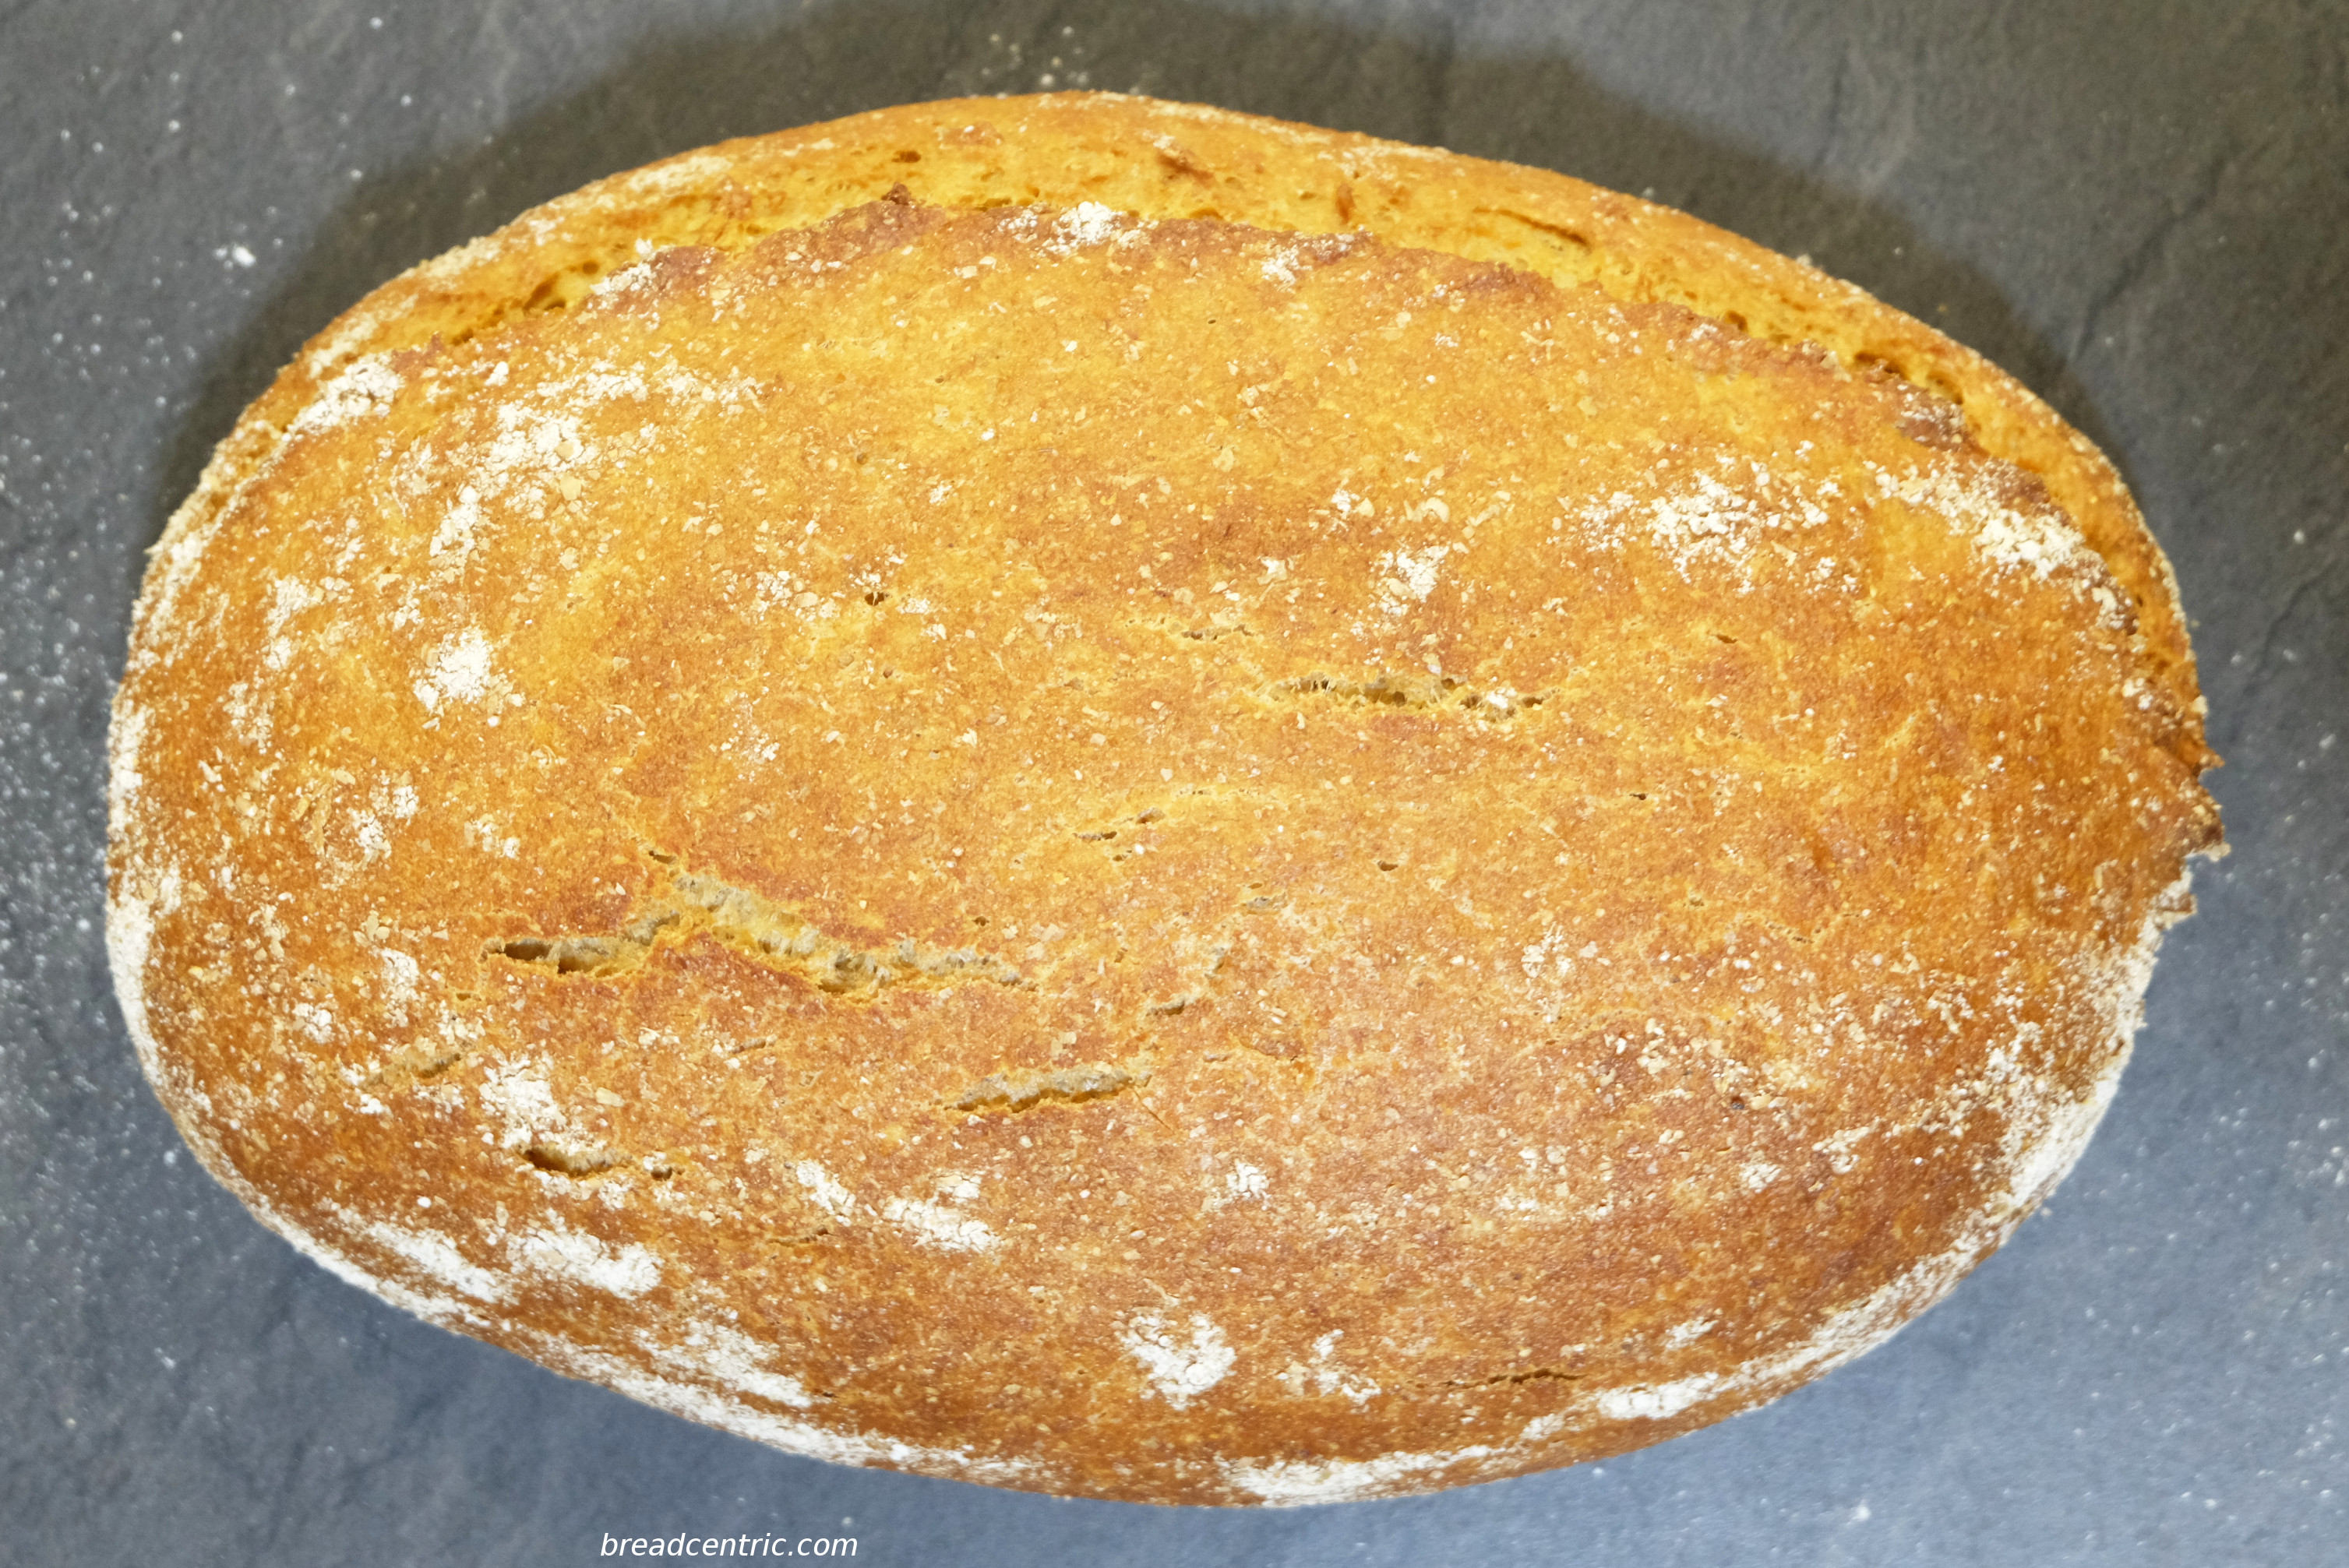 Khorasan wheat bread